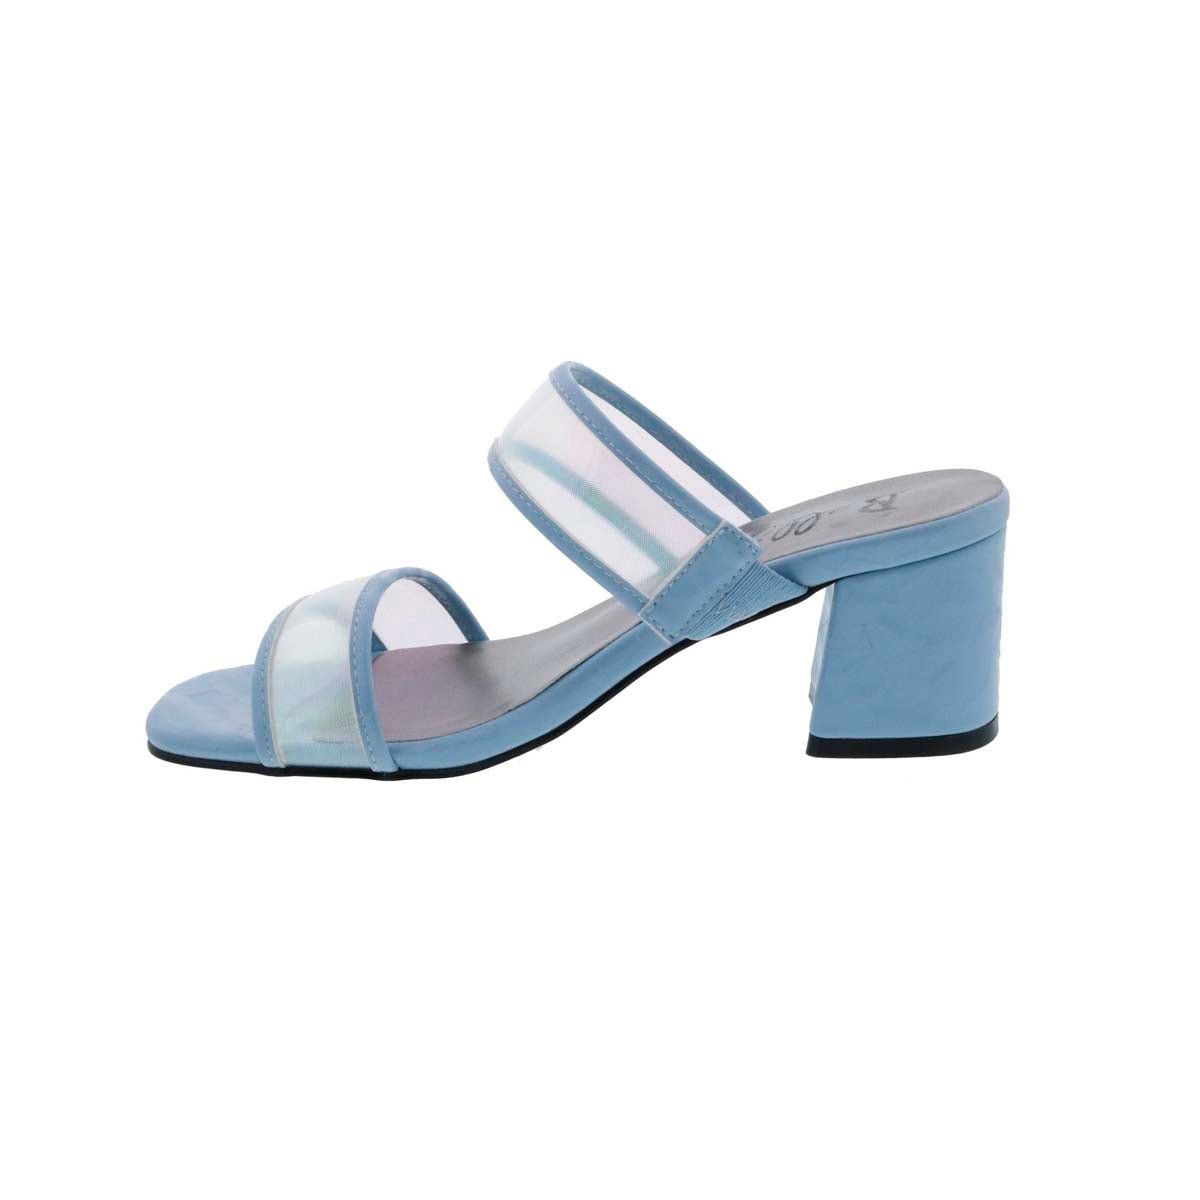 BELLINI FIZZLE WOMEN IN BLUE/LUCITE - TLW Shoes